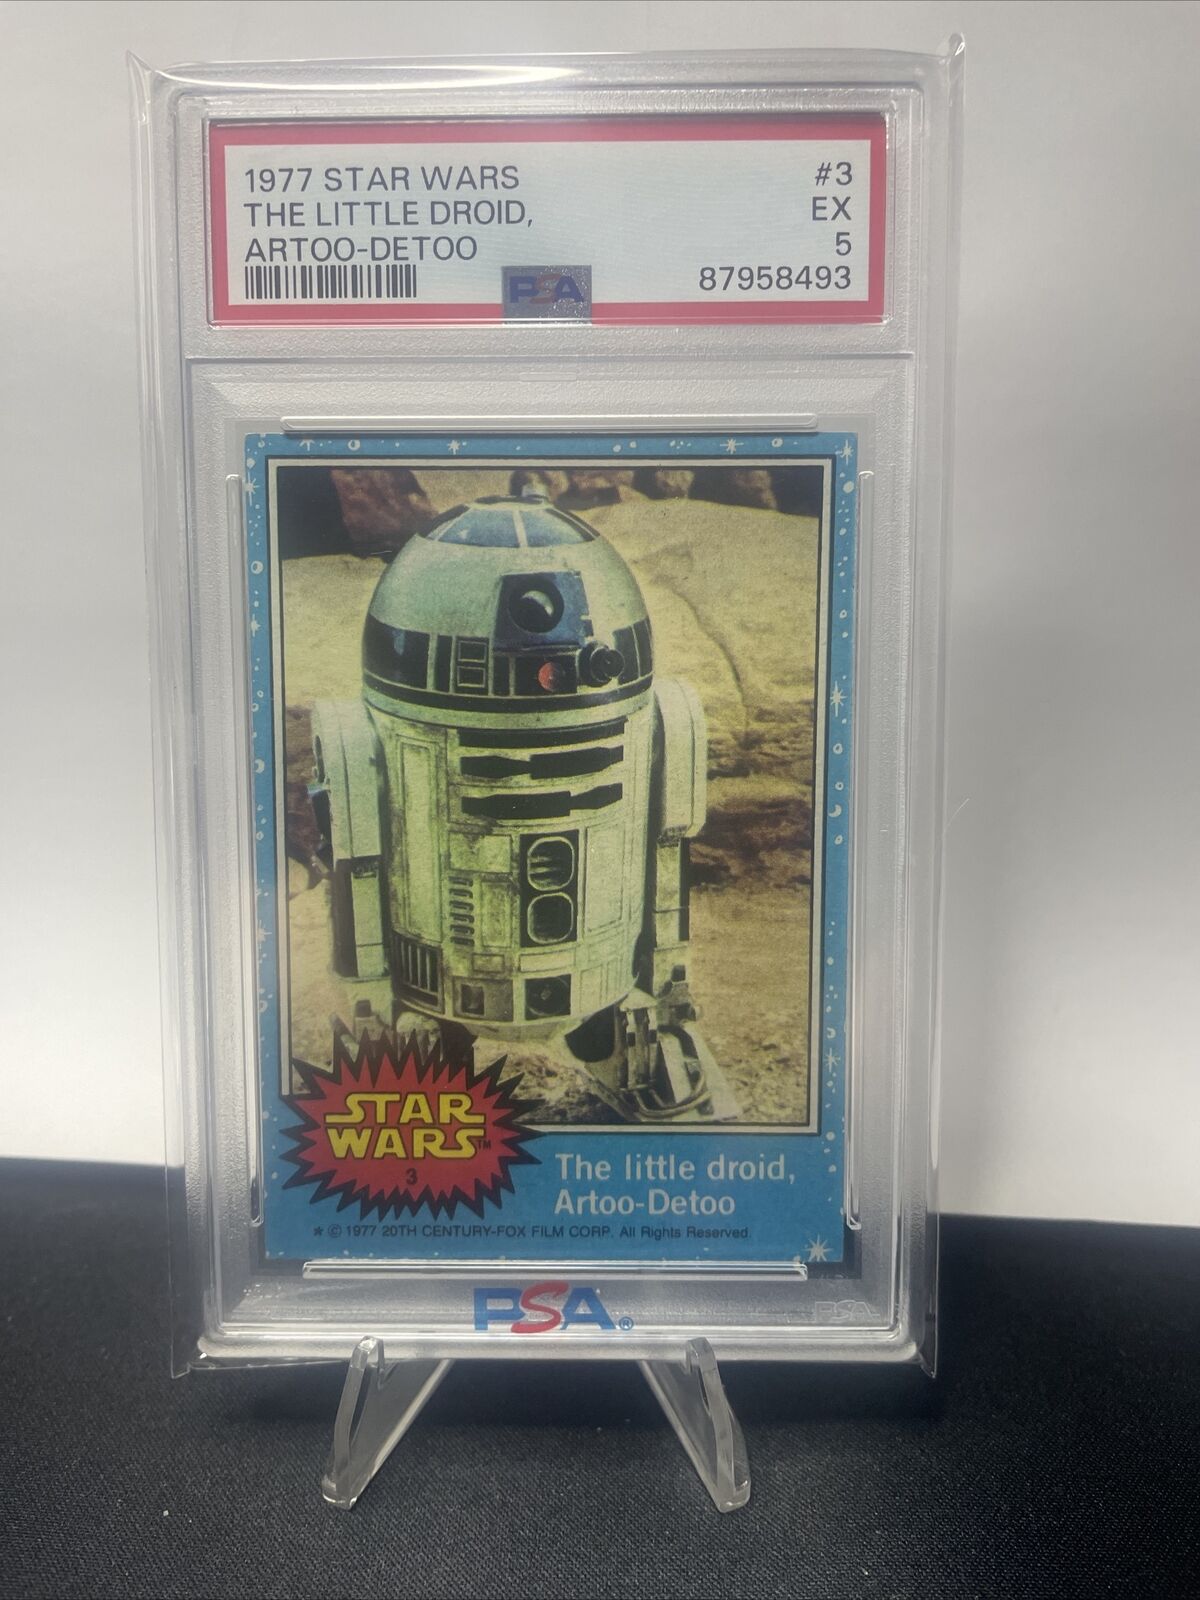 1977 Star Wars #3 the Little Droid Artoo-Detoo R2-D2 PSA 5